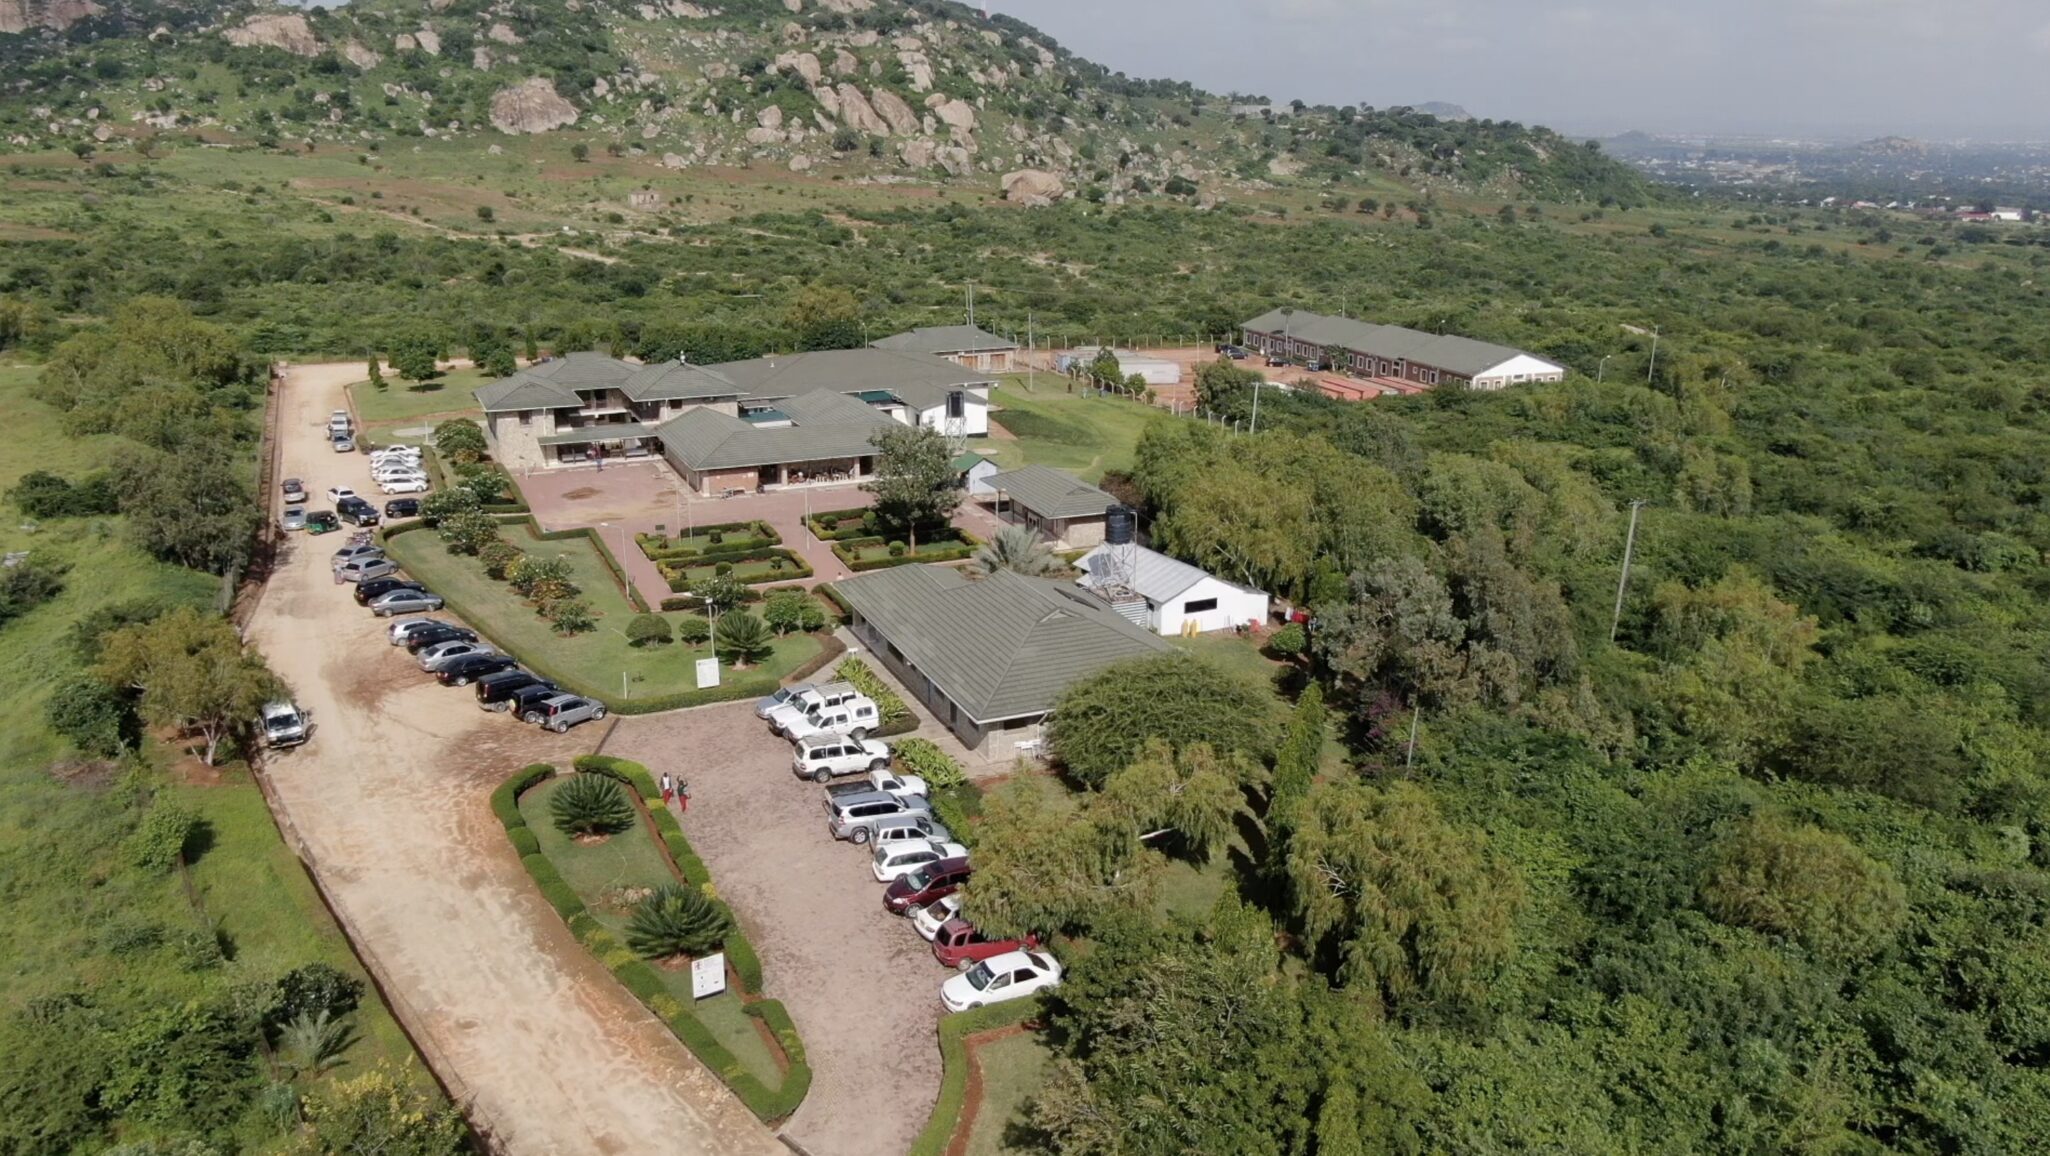 Aerial view of volunteering center in Tanzania